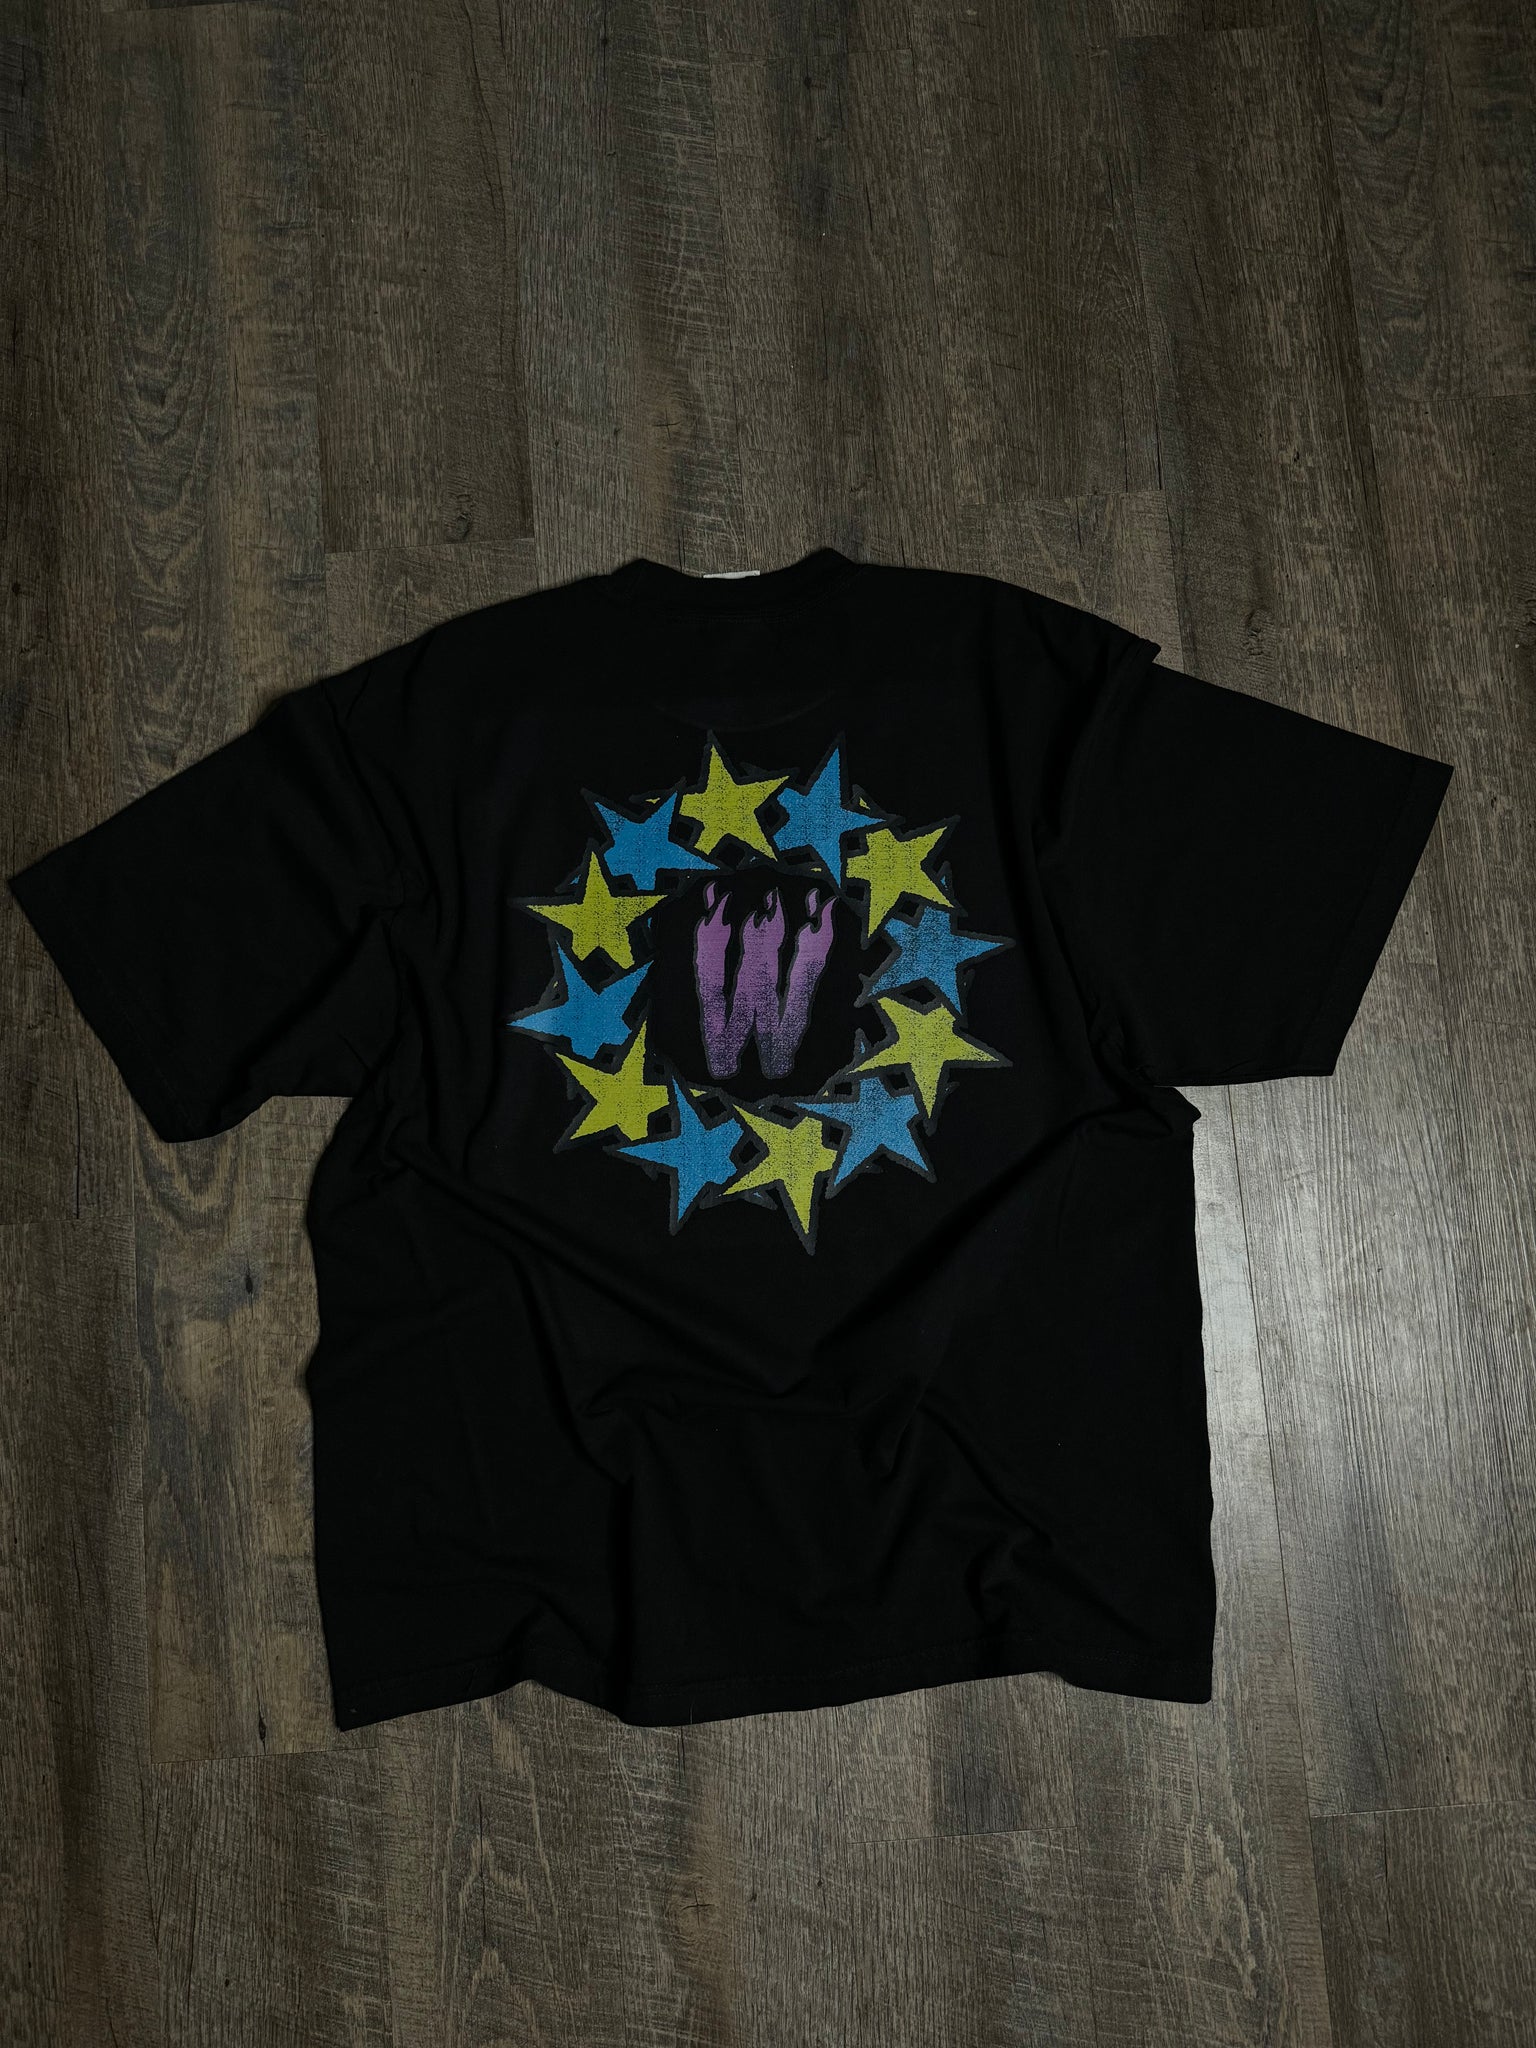 Weirdo Studios Heavyweight t-shirt - The WEiRDO Studio